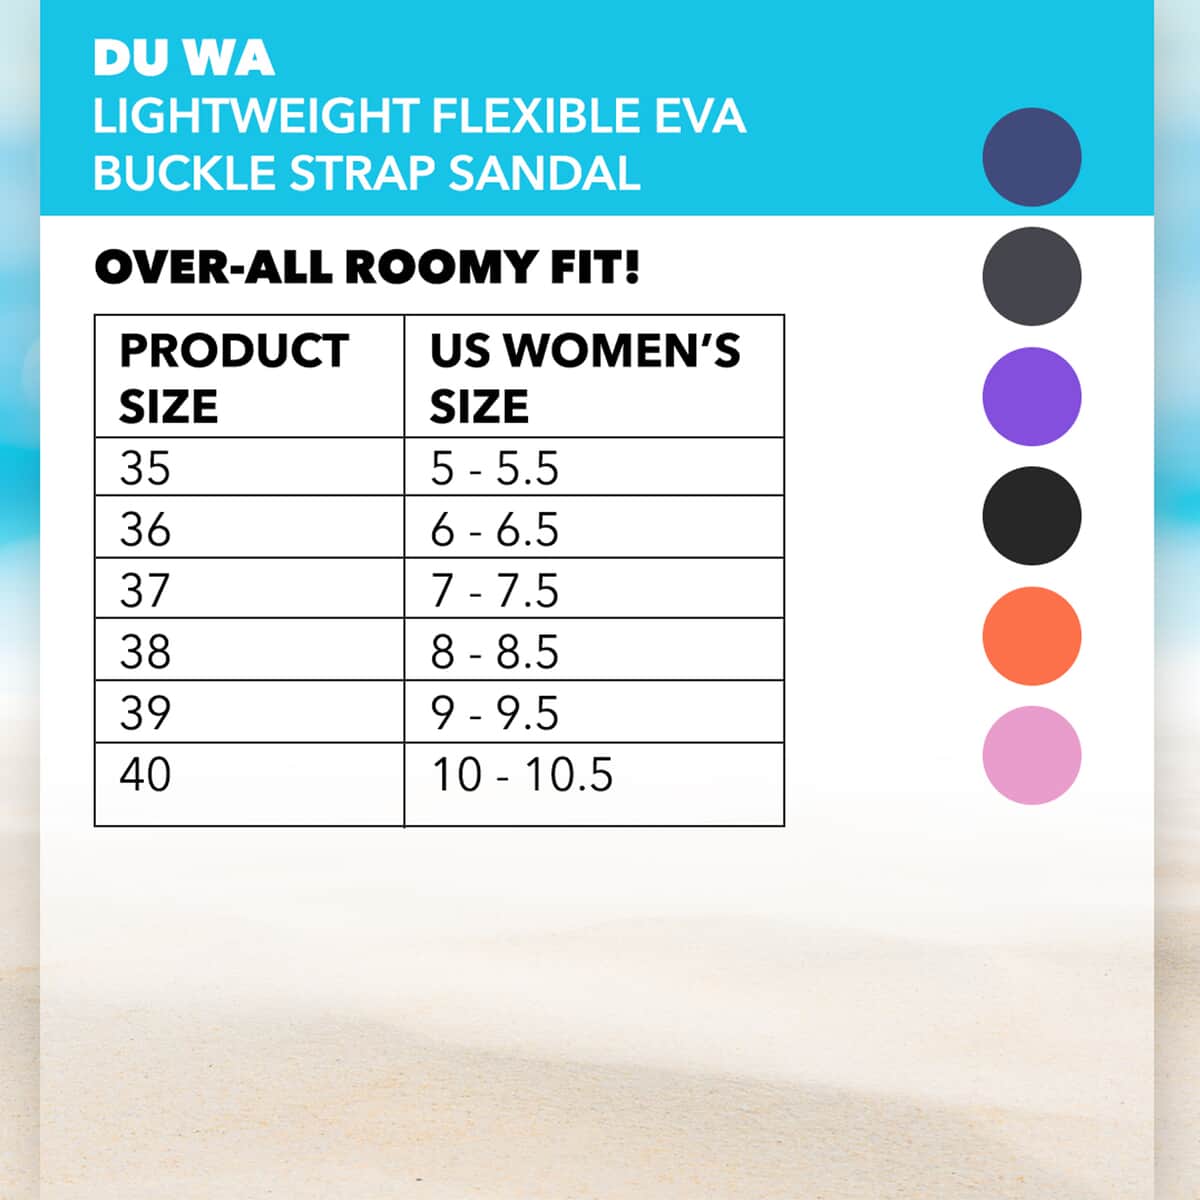 DU WA Silver Gray Ultra Lightweight Flexible EVA Buckle Strap Sandal - Size 9-9.5 image number 1